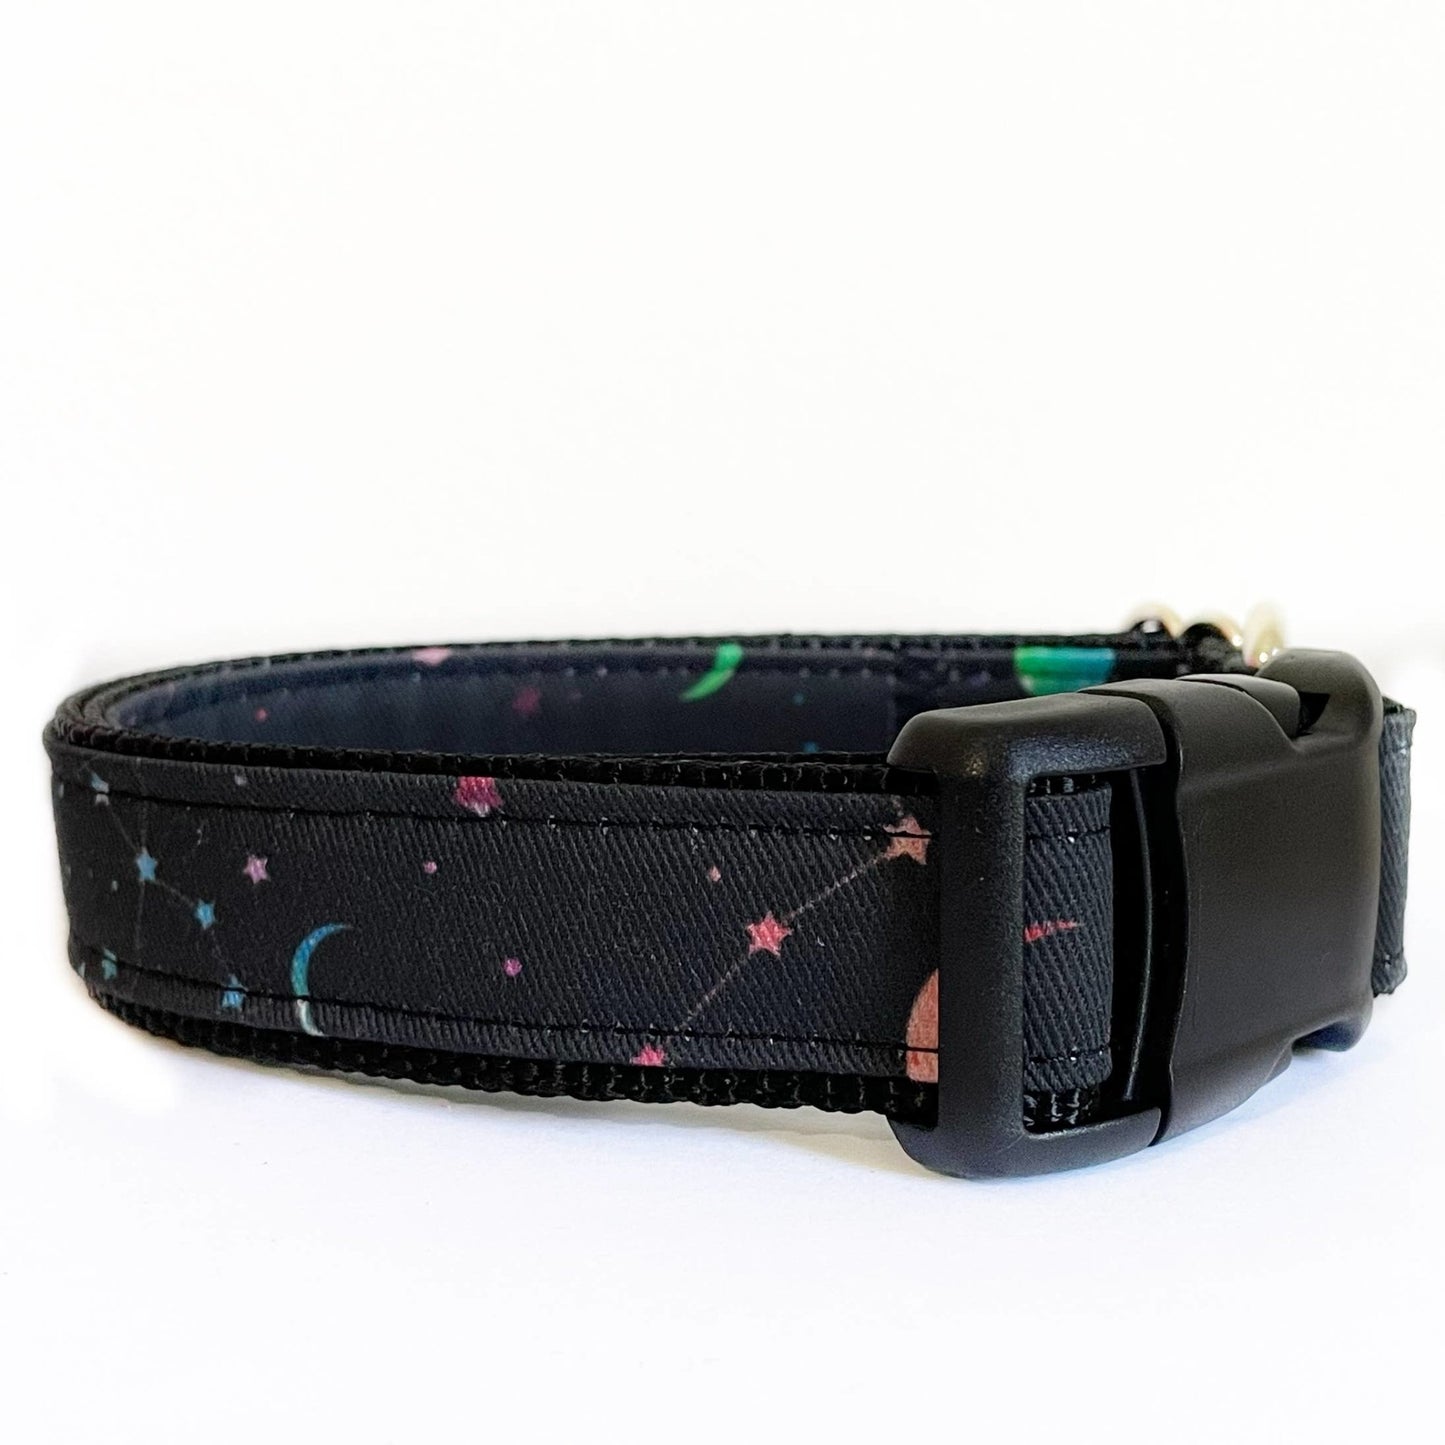 Sew Fetch Dog Collars Constellation